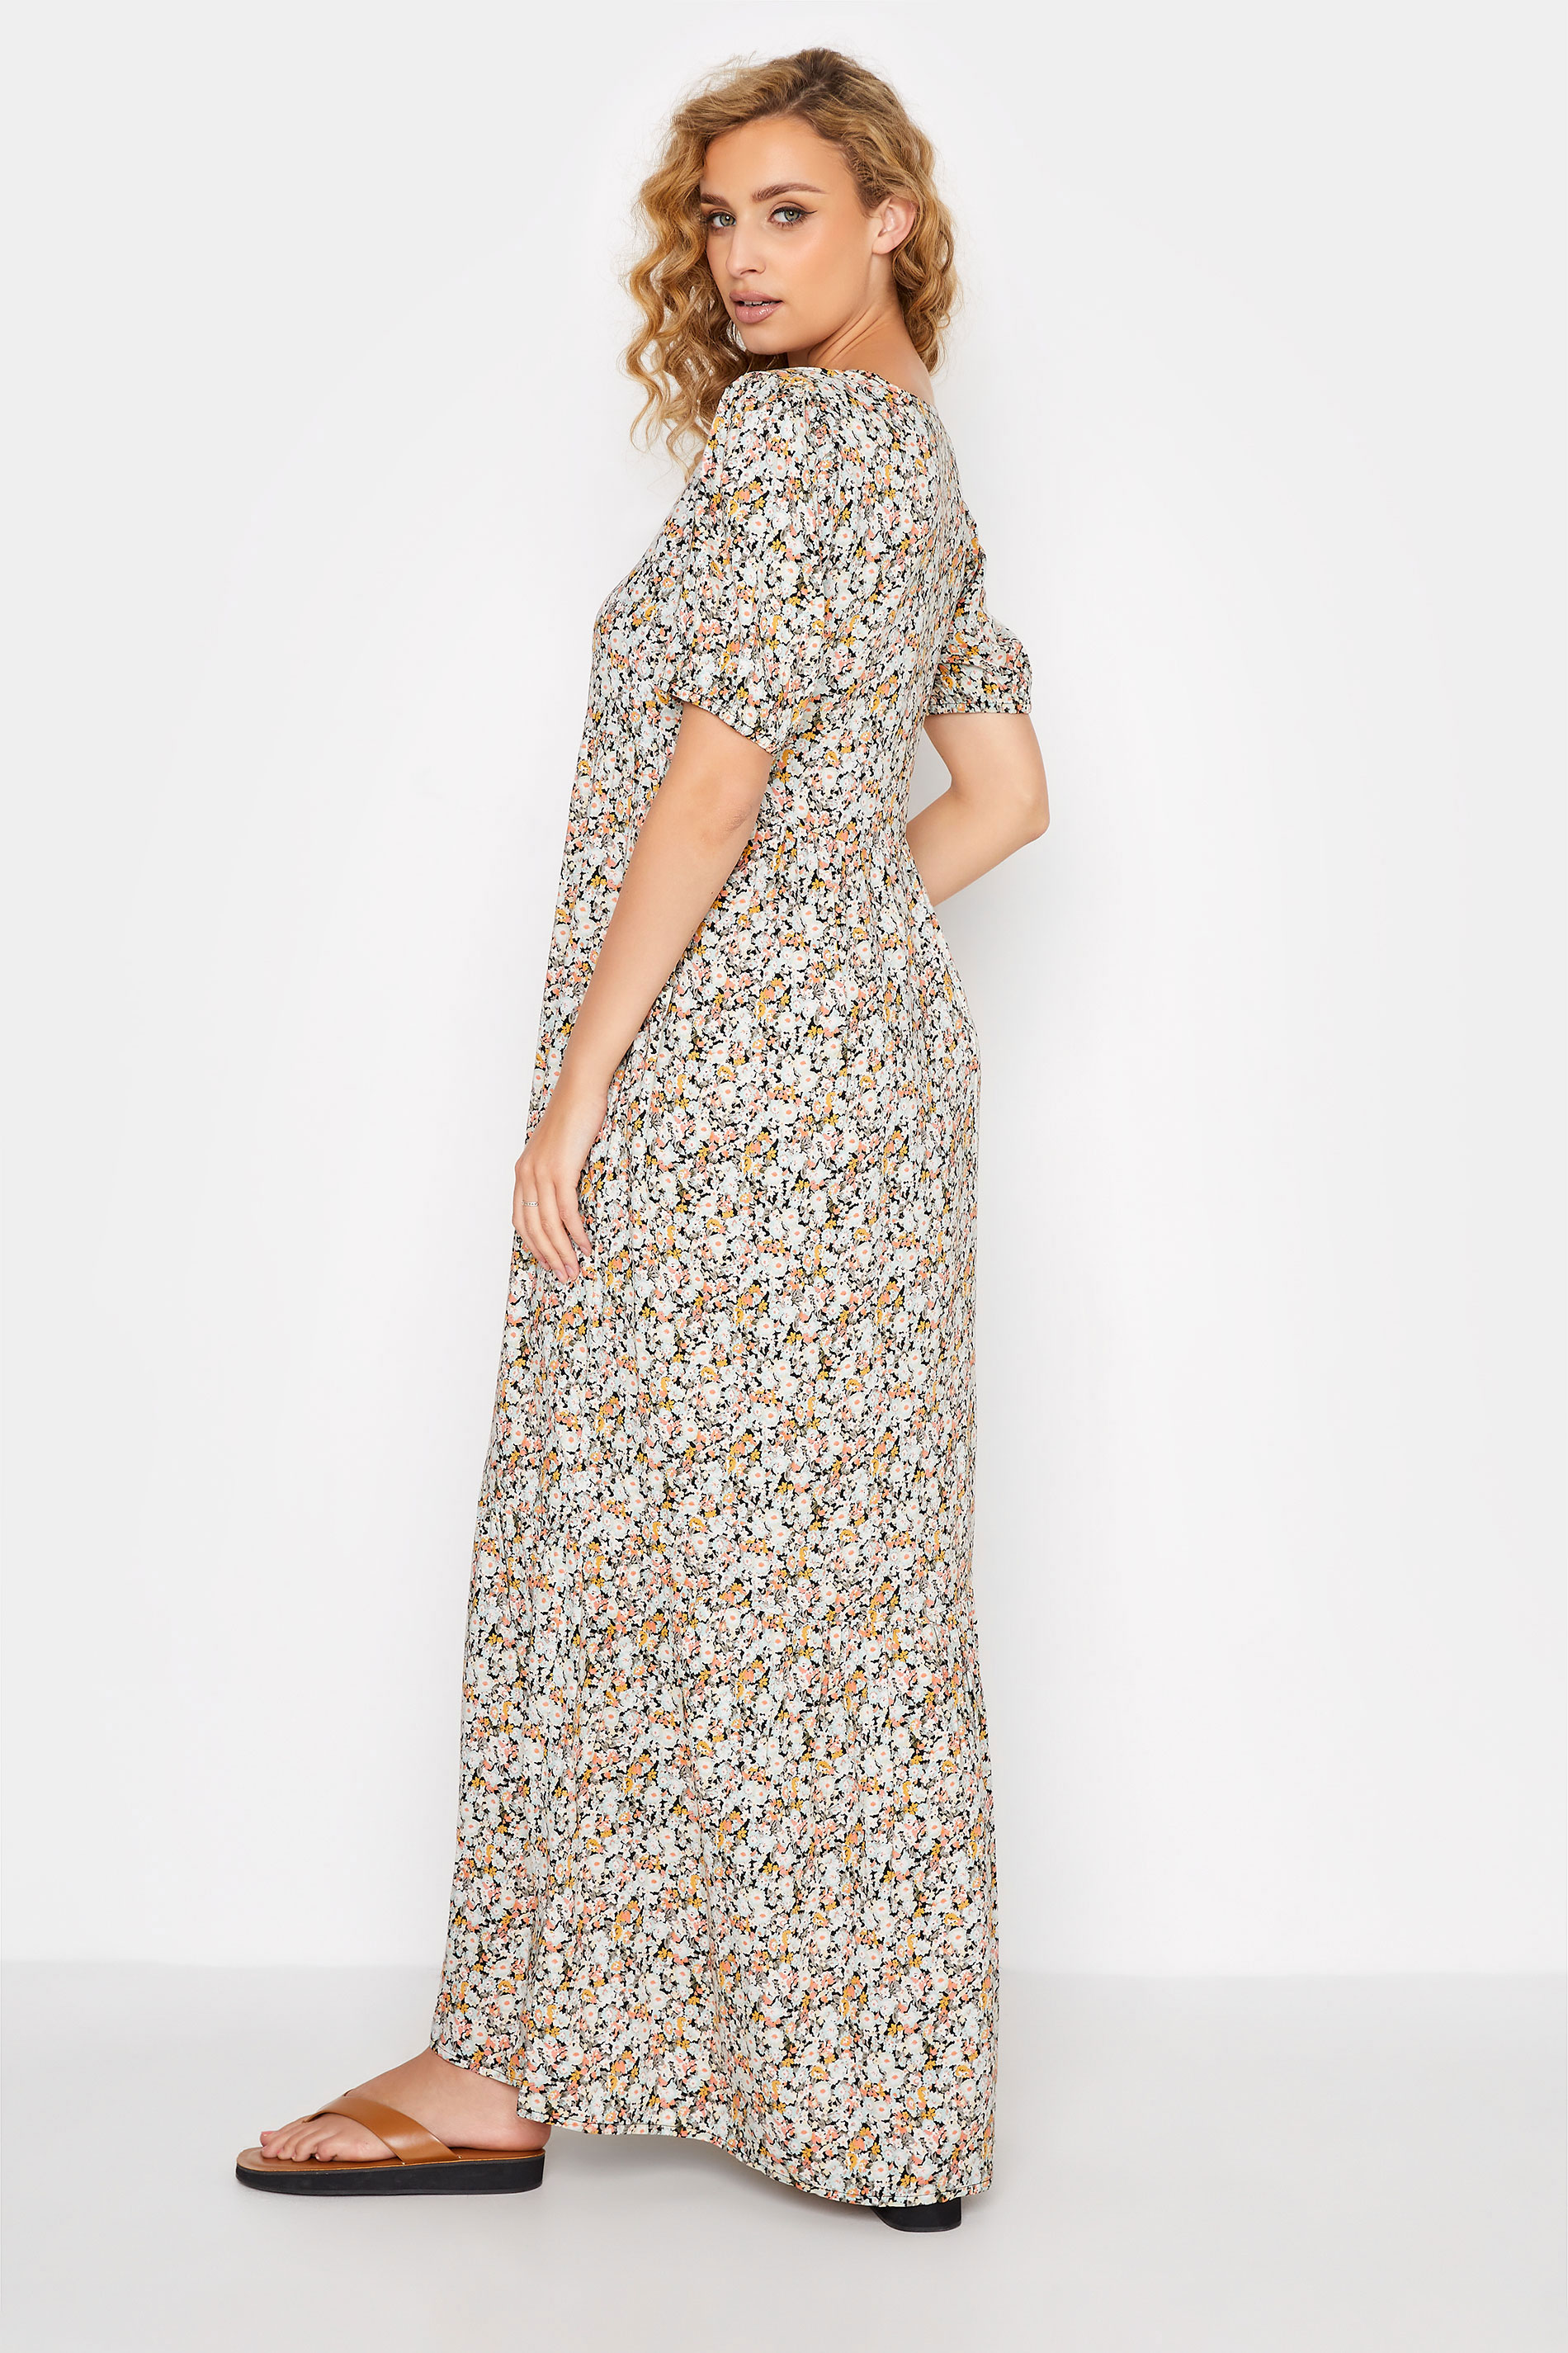 Tall Women's LTS Beige Brown Floral Print Tiered Midaxi Dress | Long Tall Sally  3